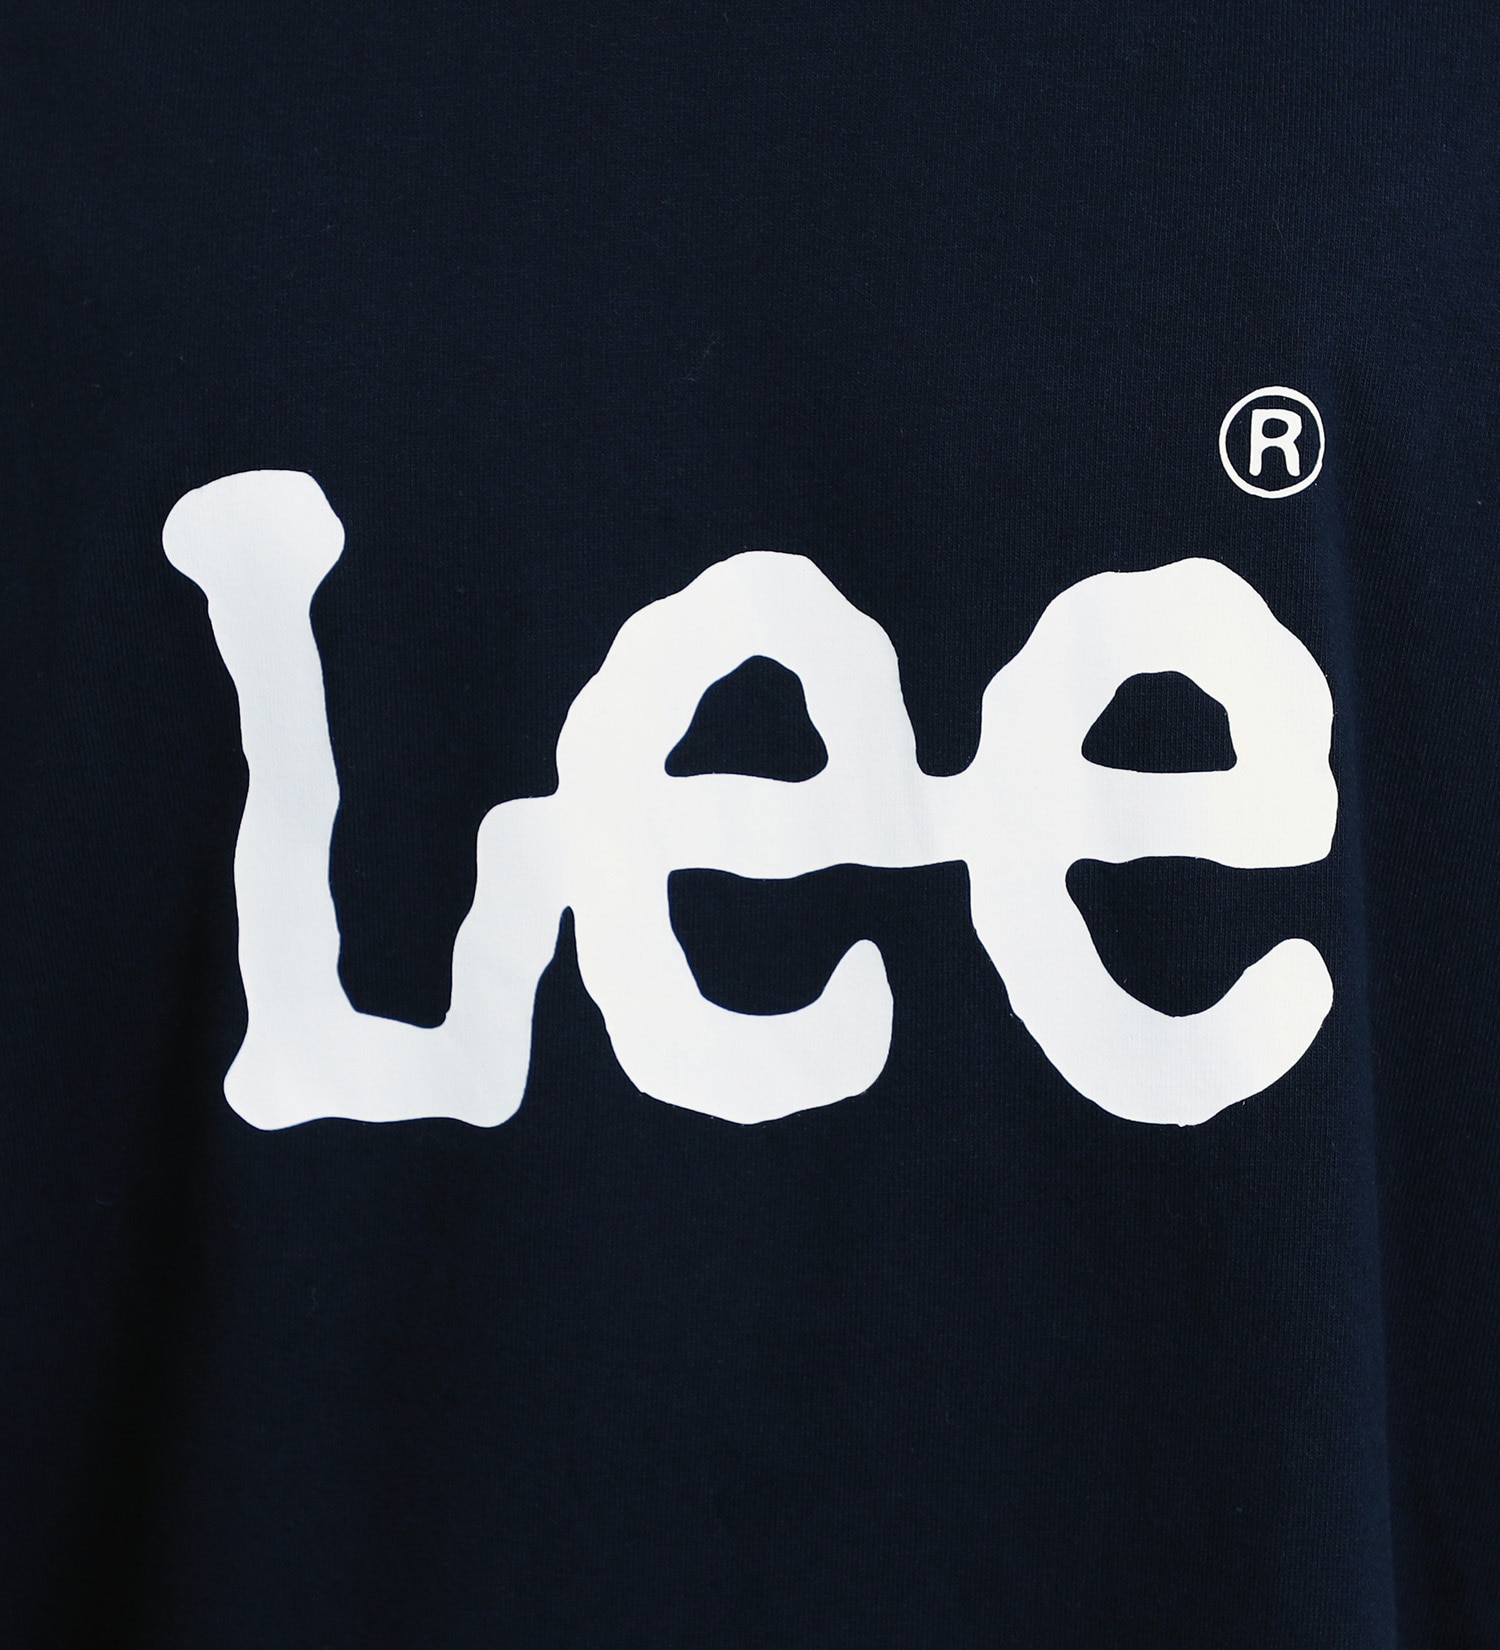 Lee(リー)の【GW SALE】【SUPER SIZED】Lee LOGO ショートスリーブTee|トップス/Tシャツ/カットソー/メンズ|ネイビー